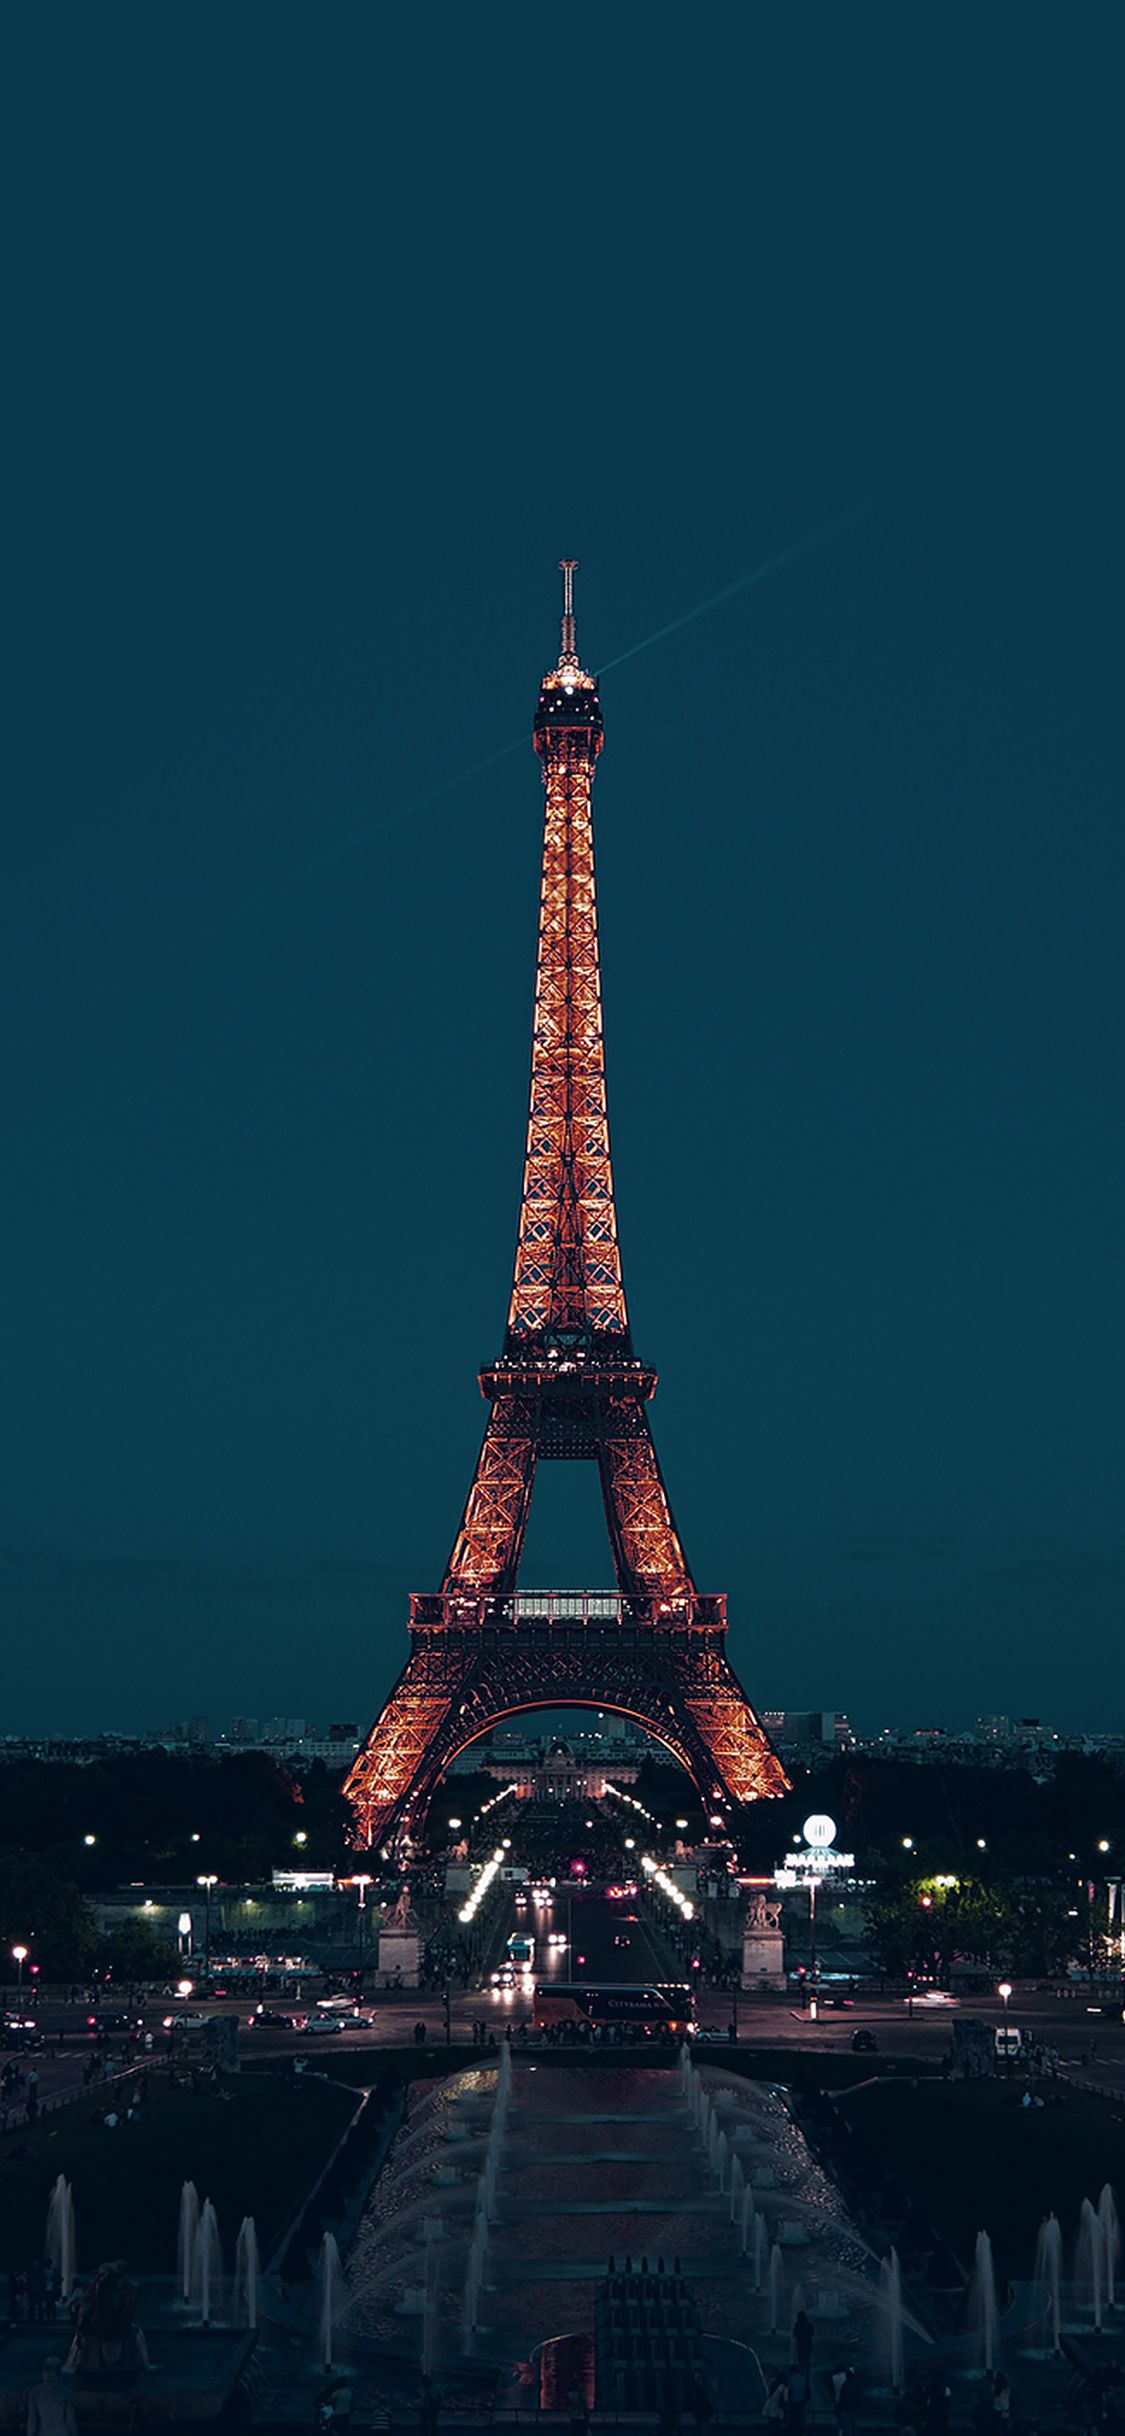 iPhone X wallpaper. paris night france city blue eiffel tower